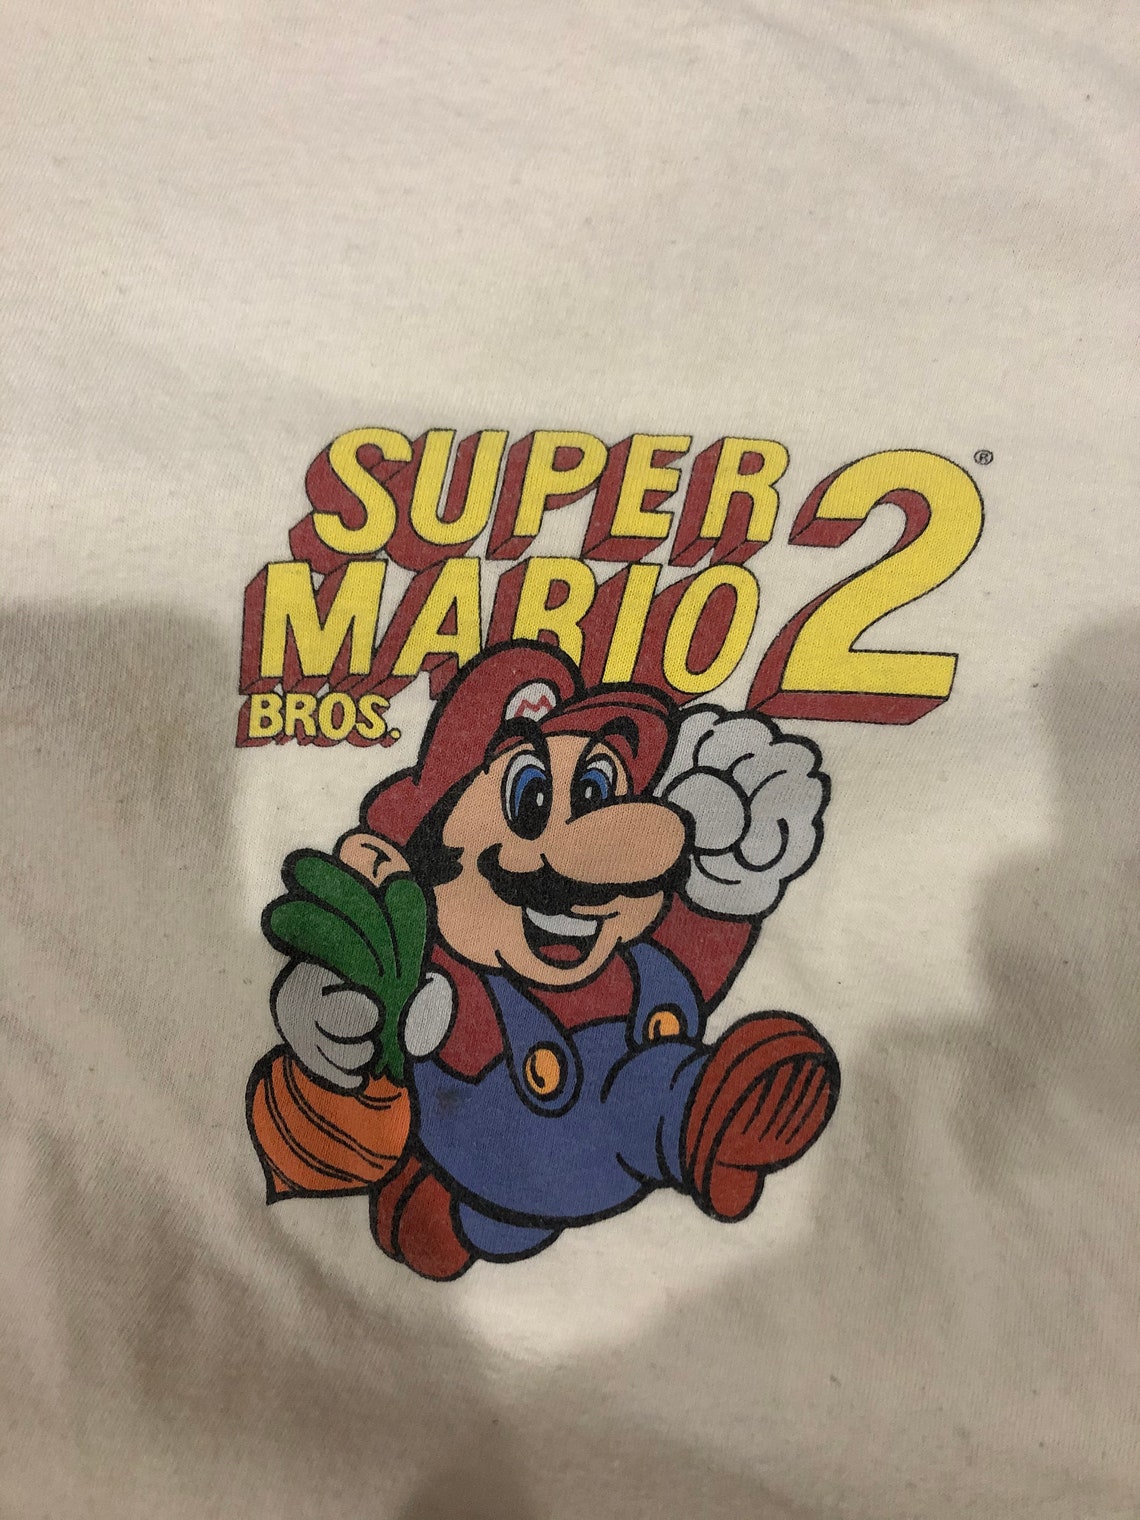 Mid 90s Bootleg Super Mario 2 | Etsy